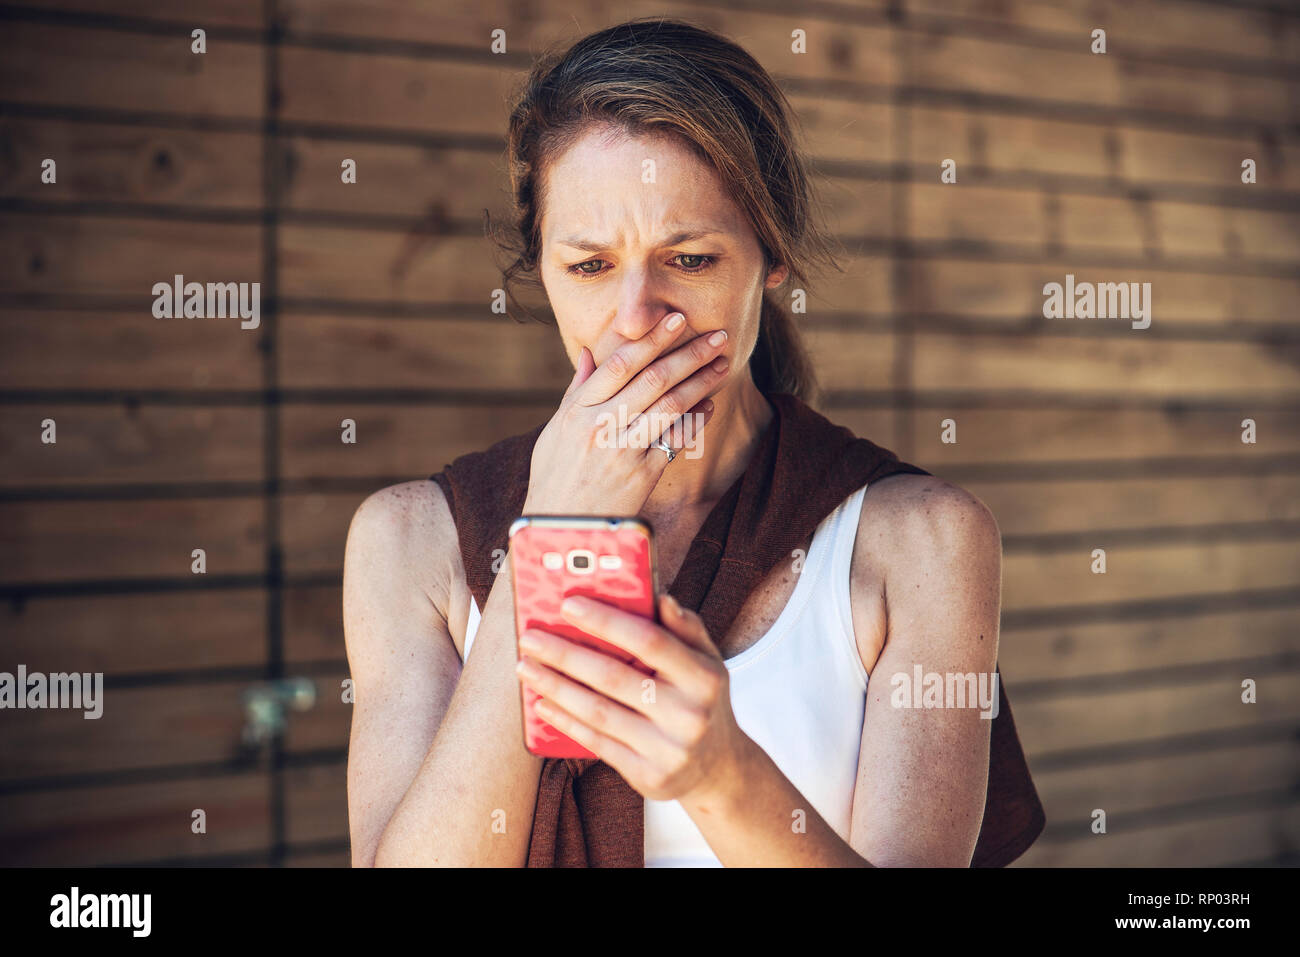 Serious mature woman looking at smart phone Stock Photo